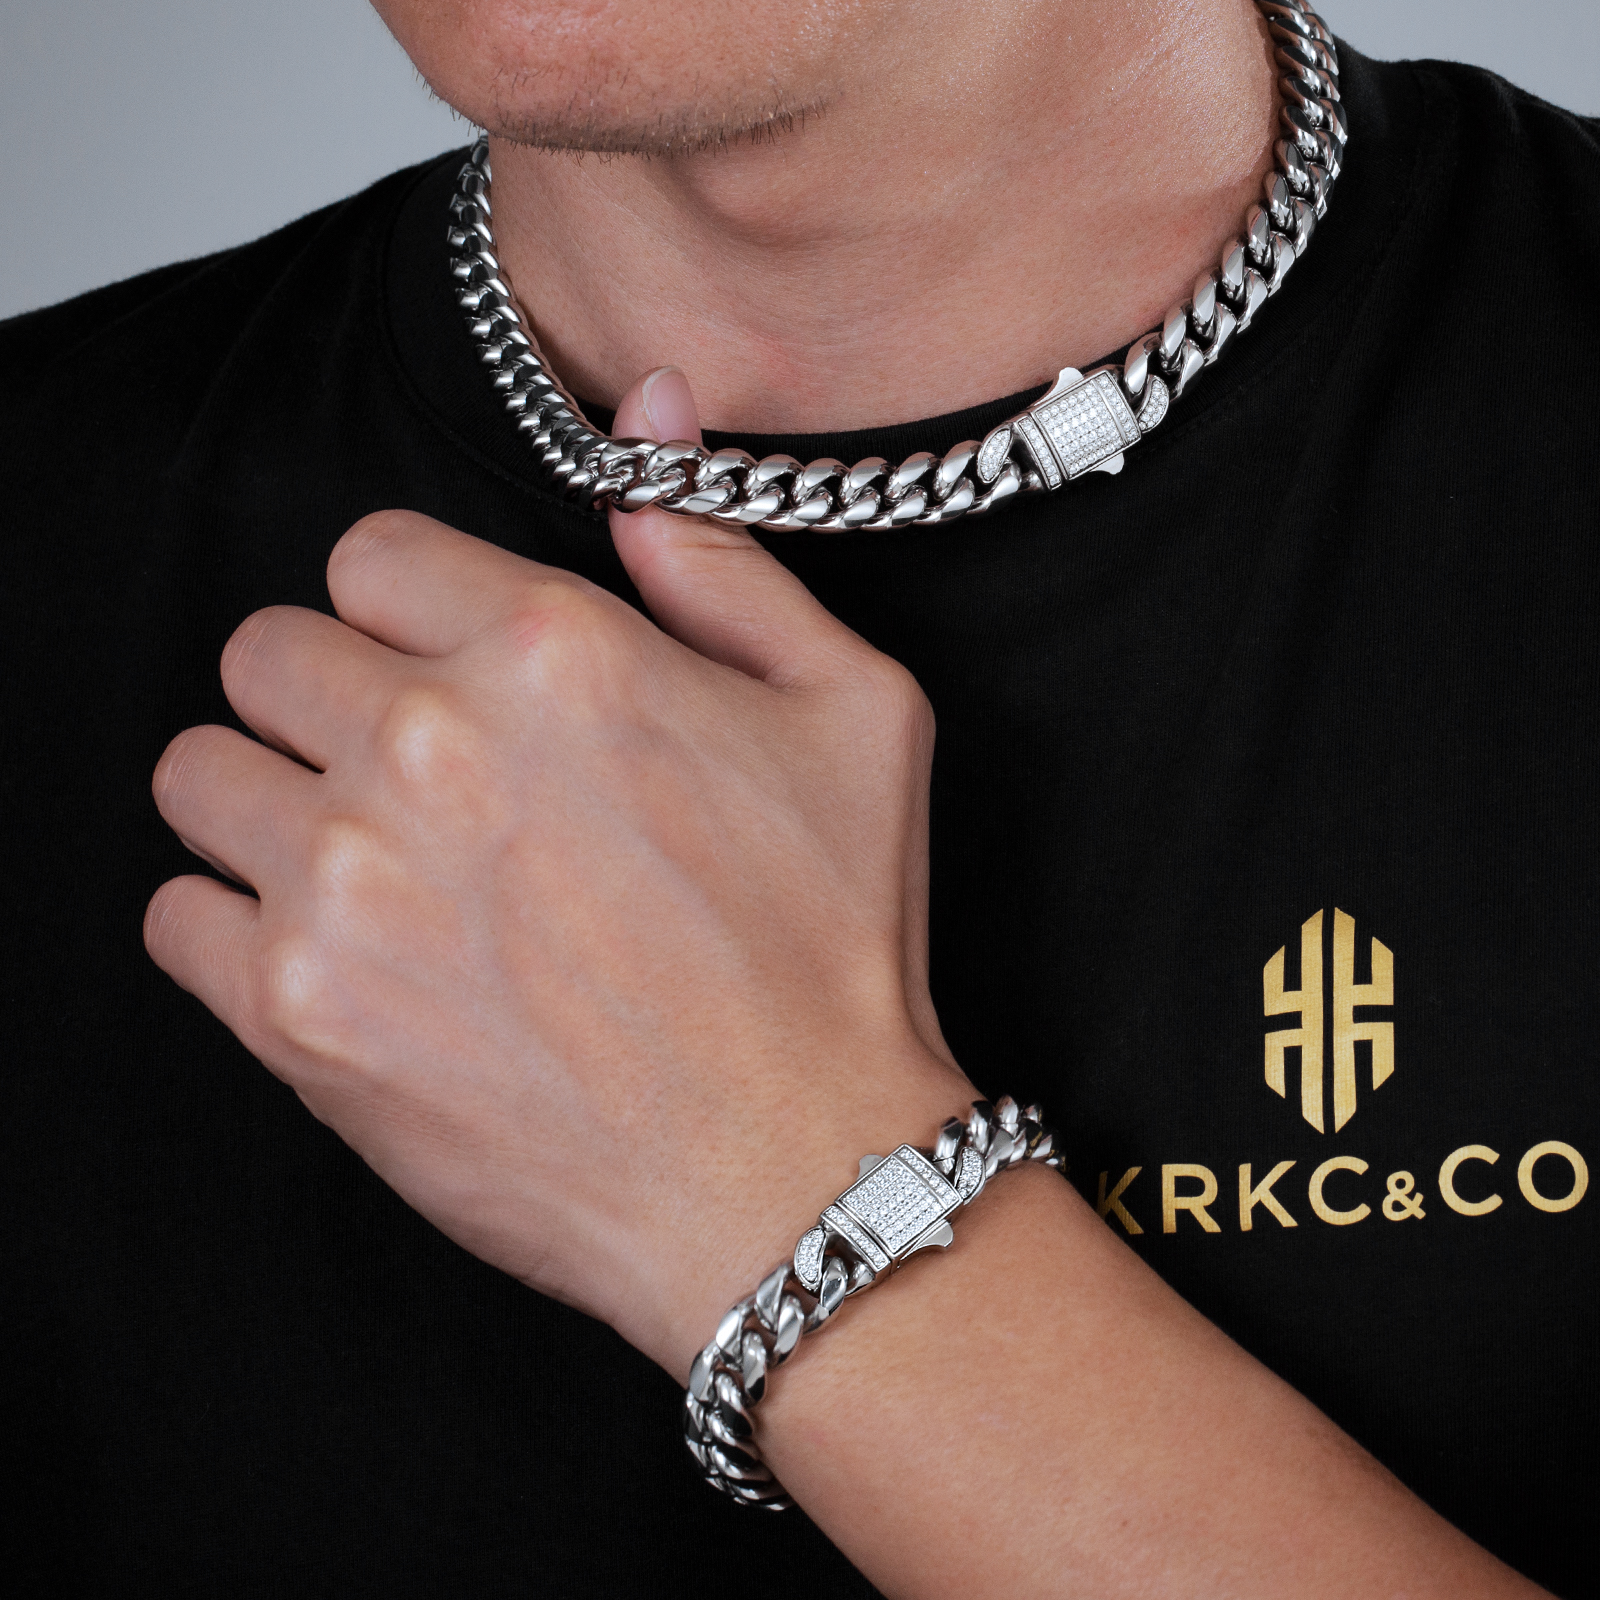 KRKCCO ネックレス全5種 - 通販 - guianegro.com.br